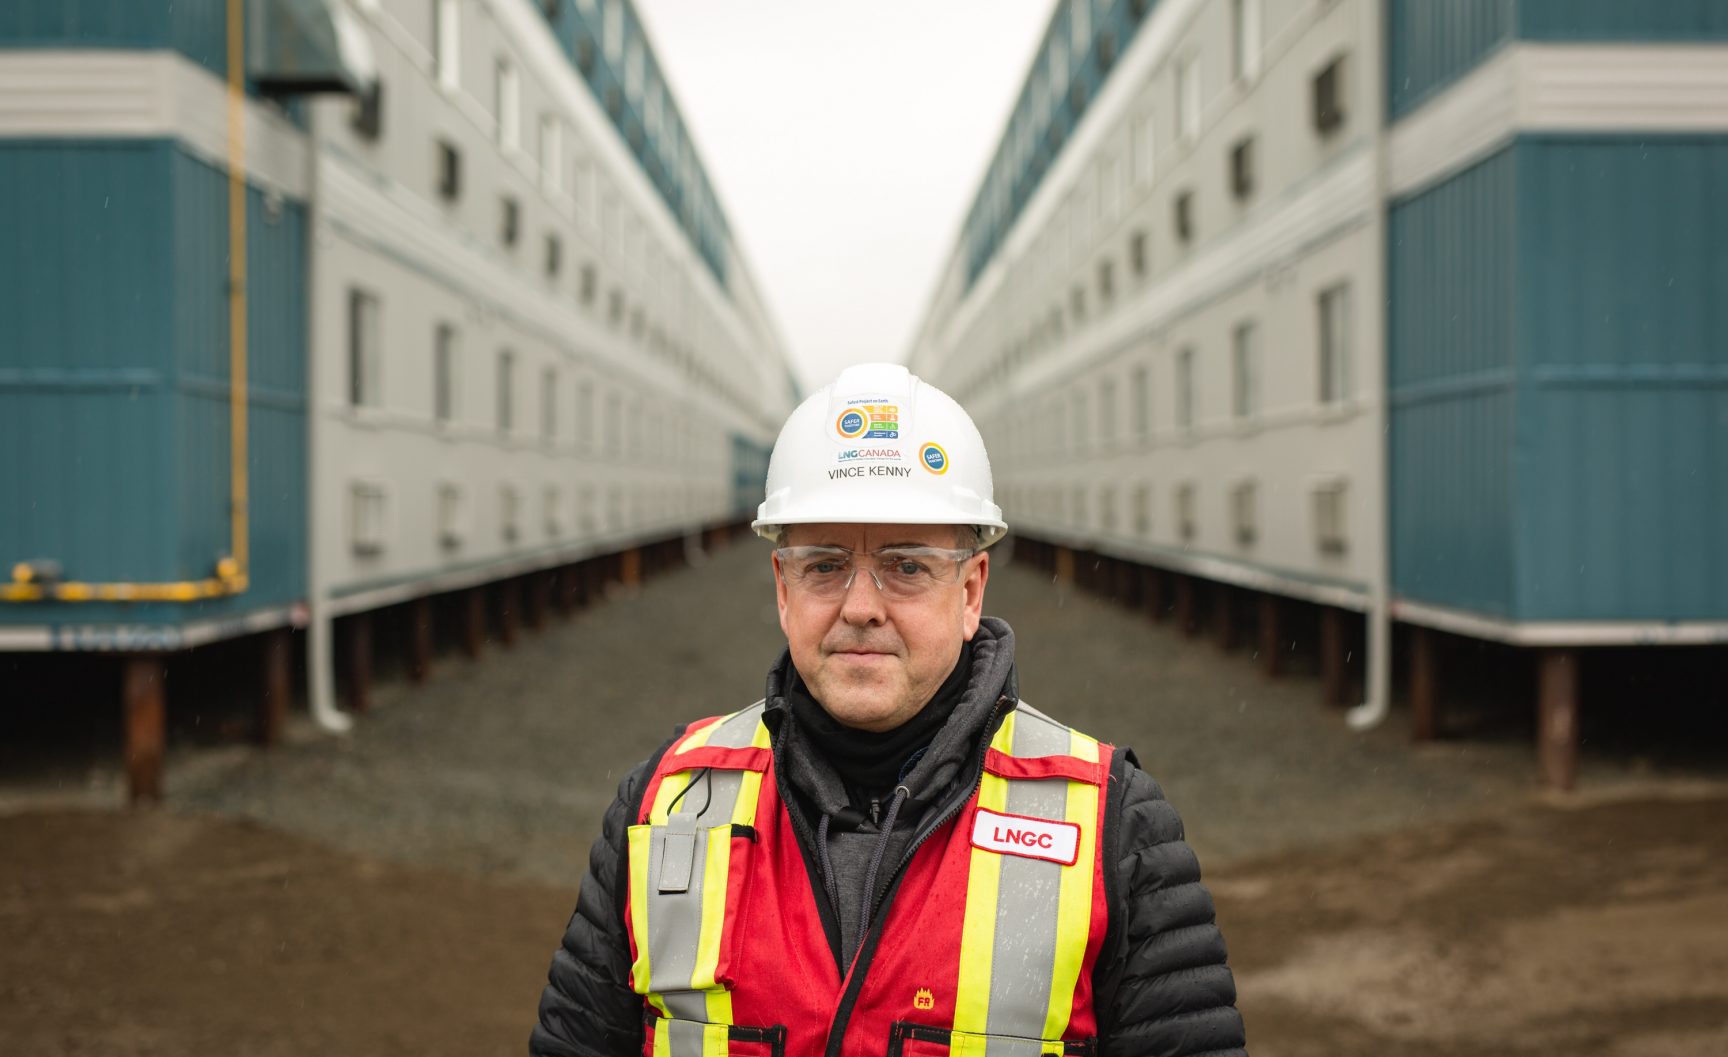 LNG Canada resumes construction activities